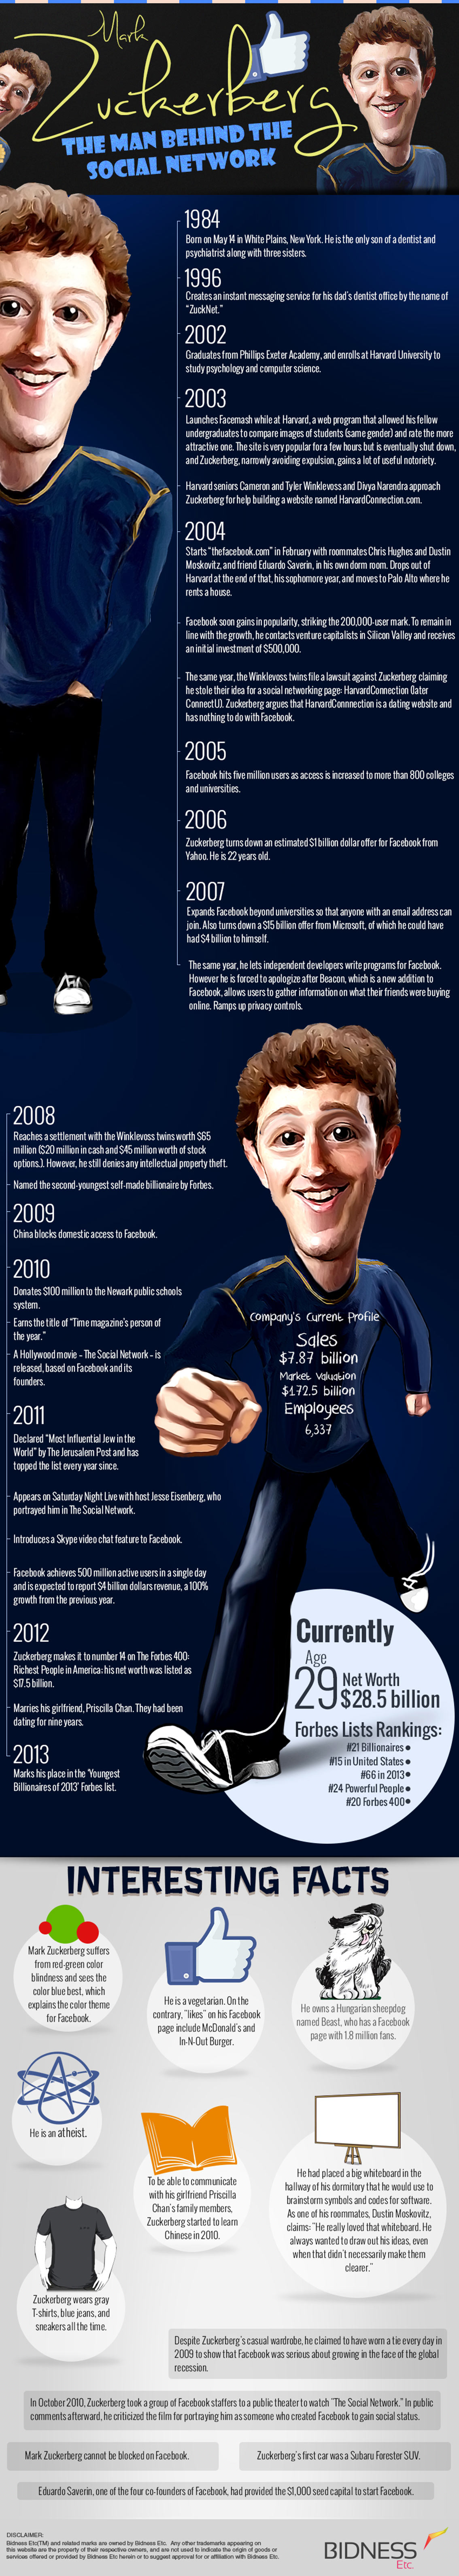 Life History of Mark Zuckerberg Infographic